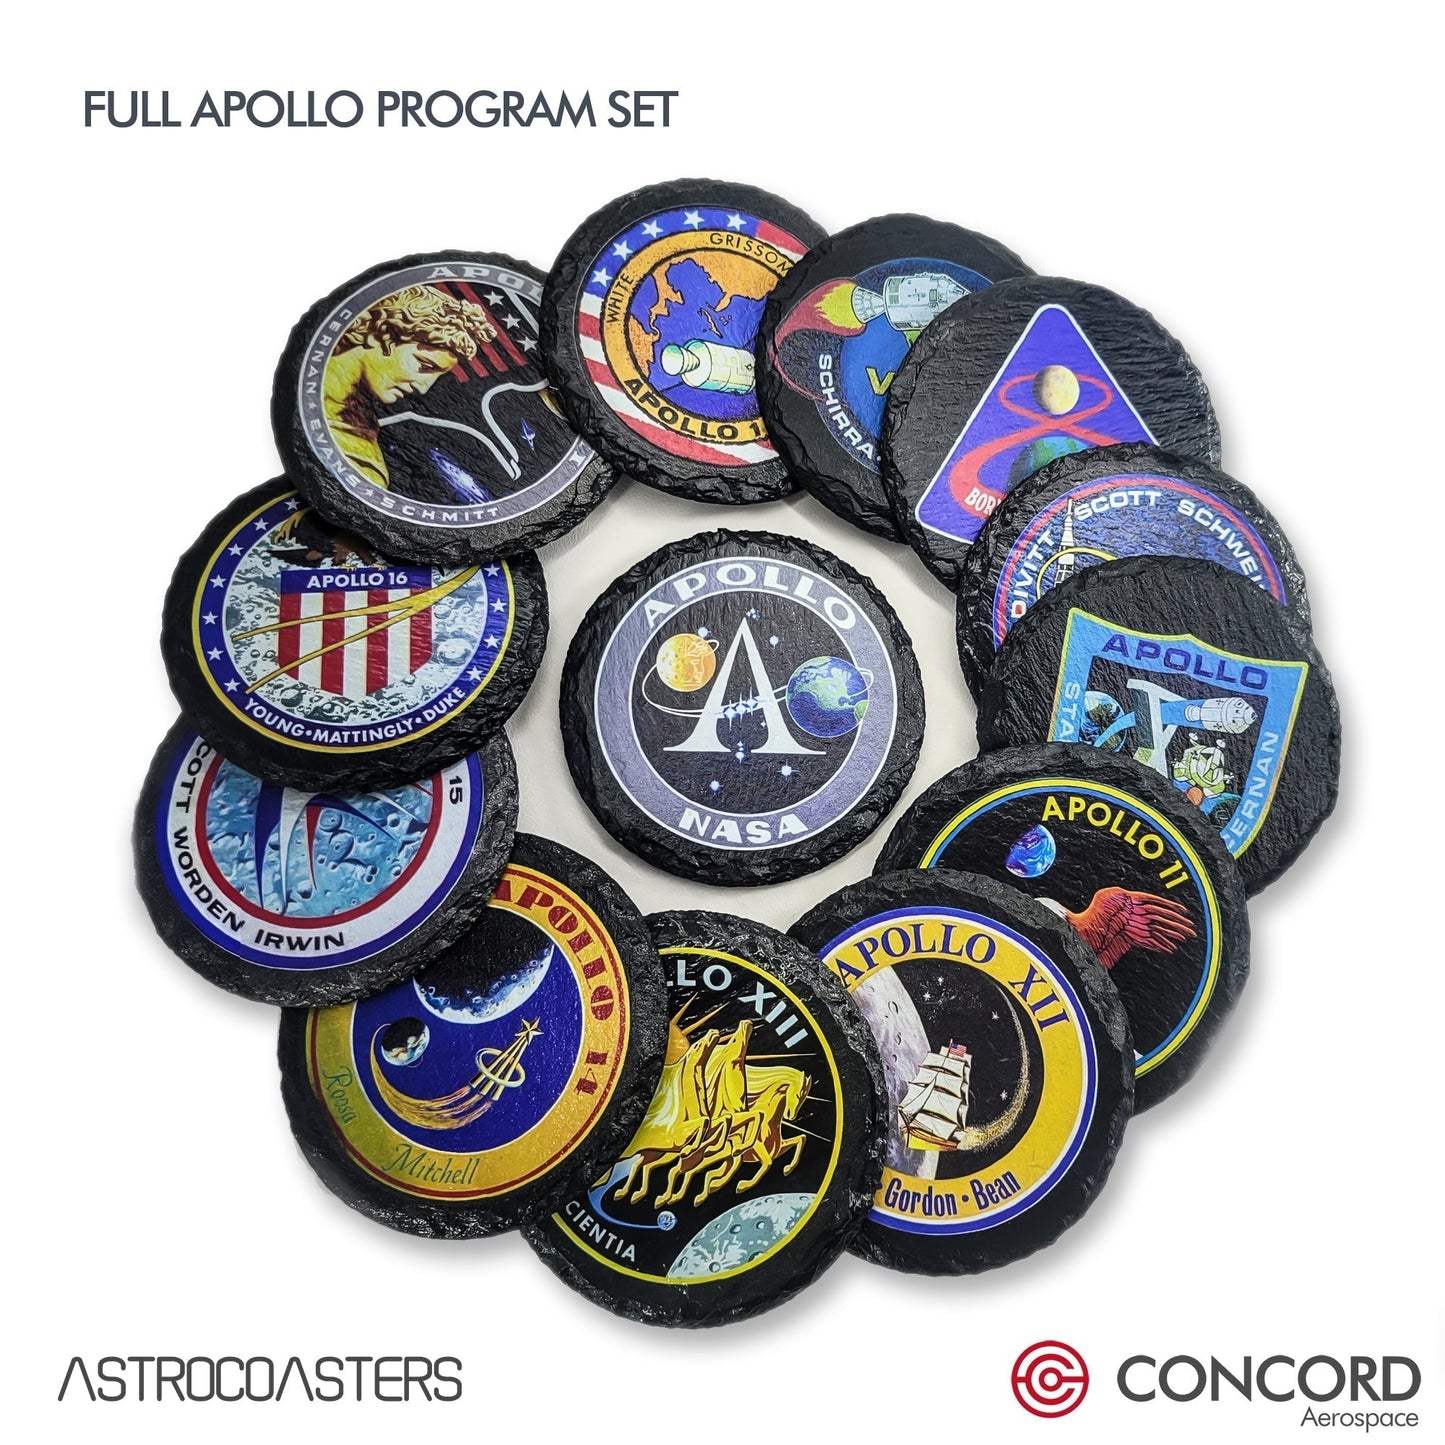 SKYLAB III - SLATE COASTER - Concord Aerospace Concord Aerospace Concord Aerospace Coasters